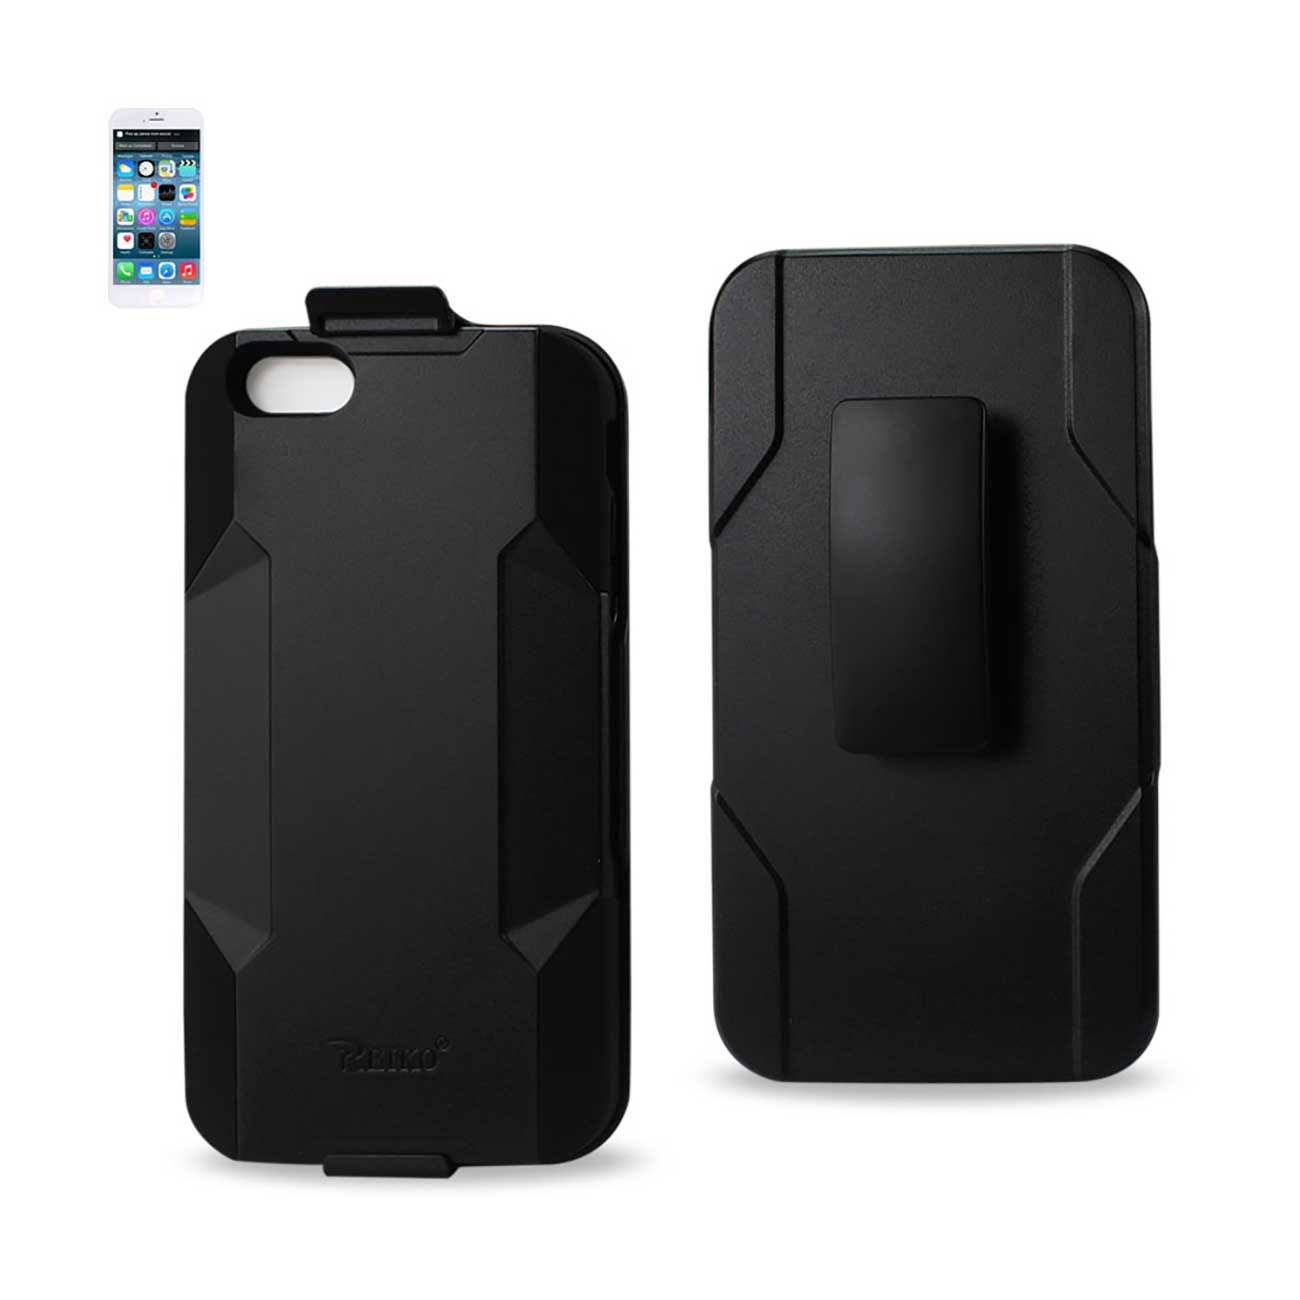 Reiko iPhone 6 Plus 3-In-1 Hybrid Heavy Duty Holster Combo Case In Black